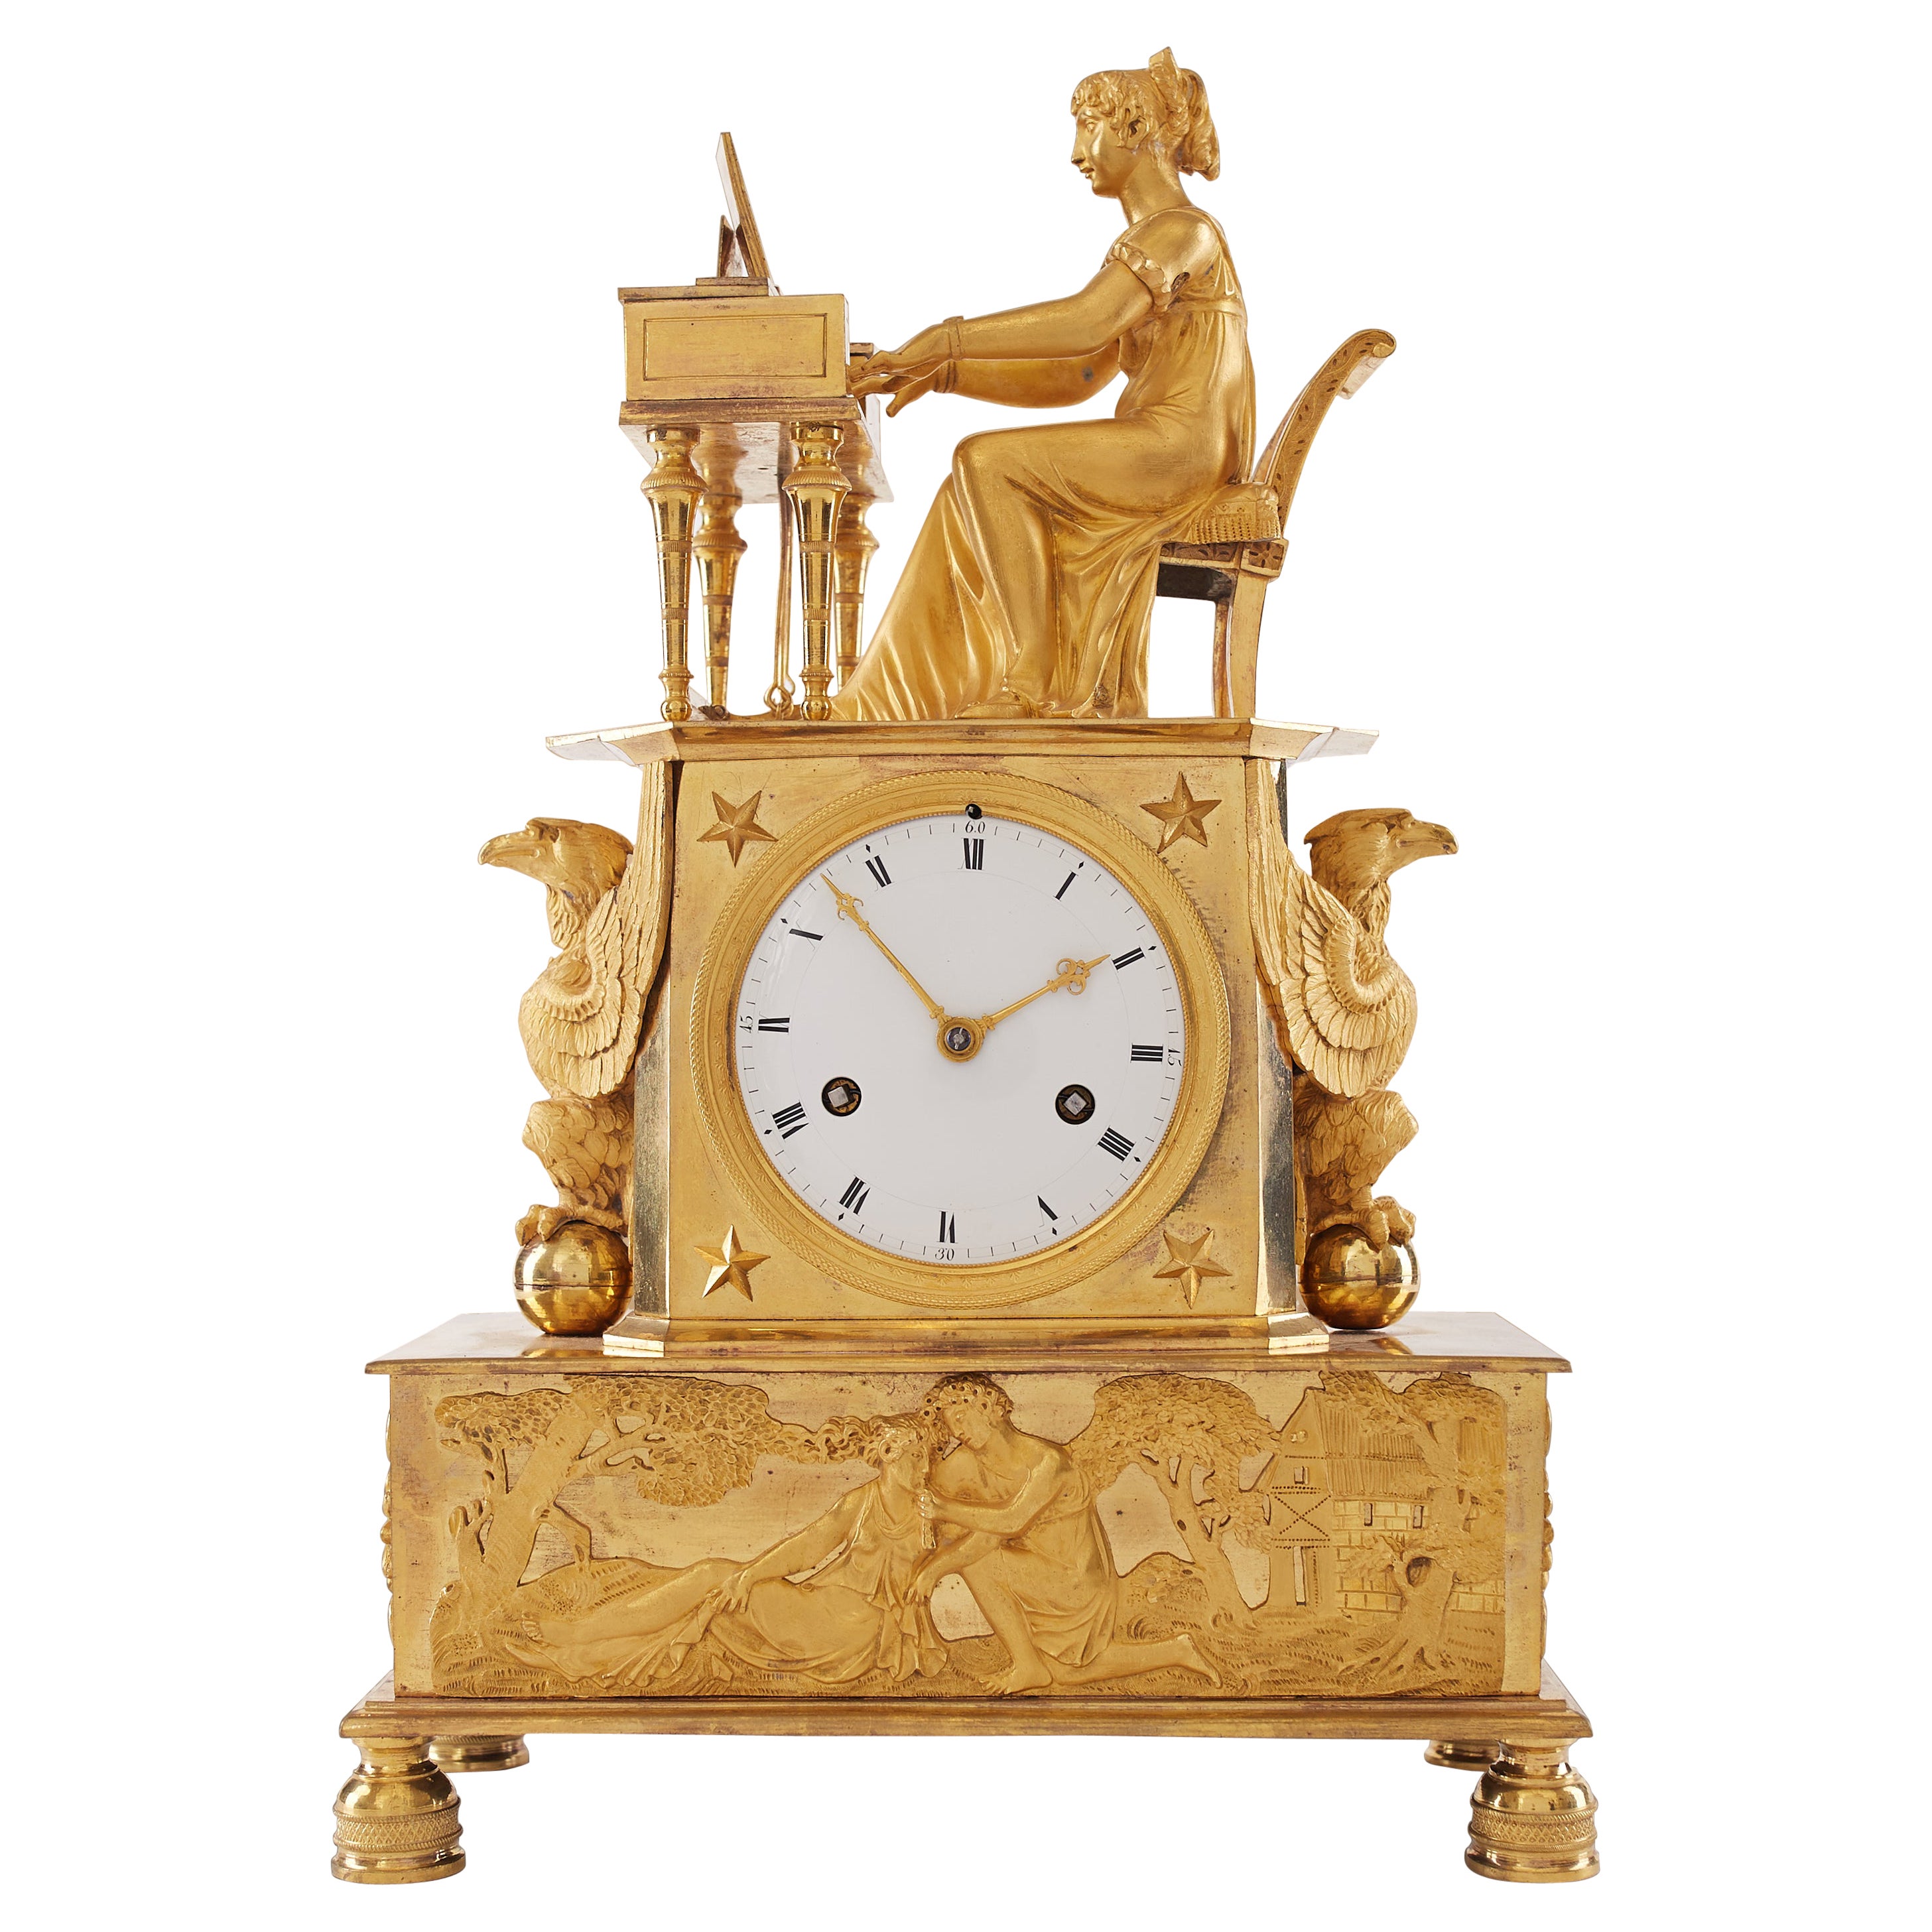 Unusual Empire-Style Ormolu Clock from the 19th Century